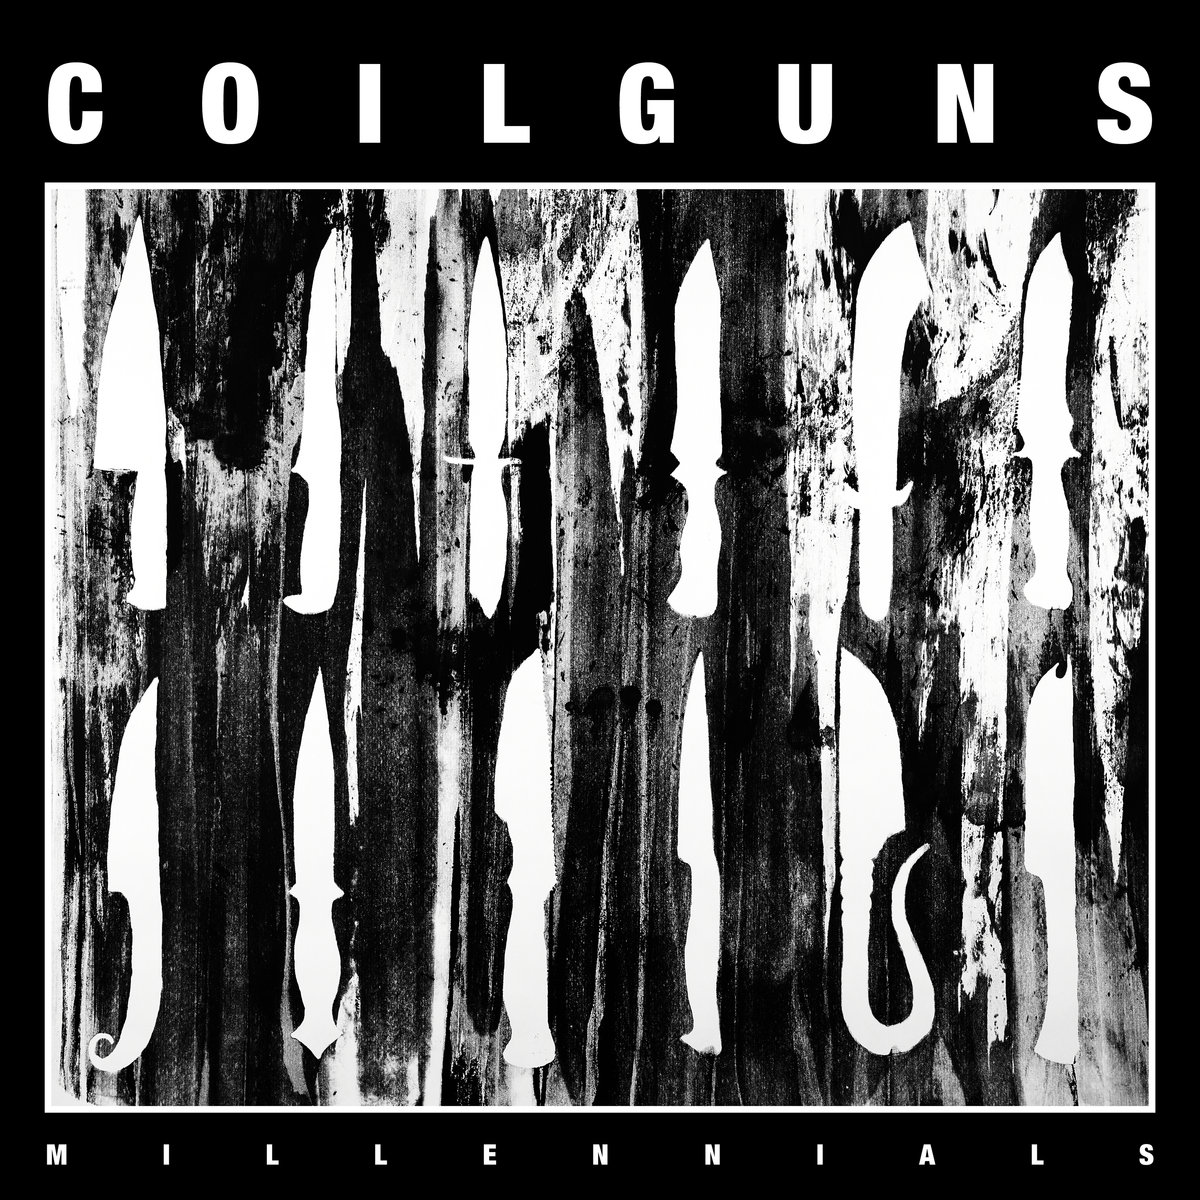 COILGUNS nuevo álbum “Millennials” para marzo, video clip en linea